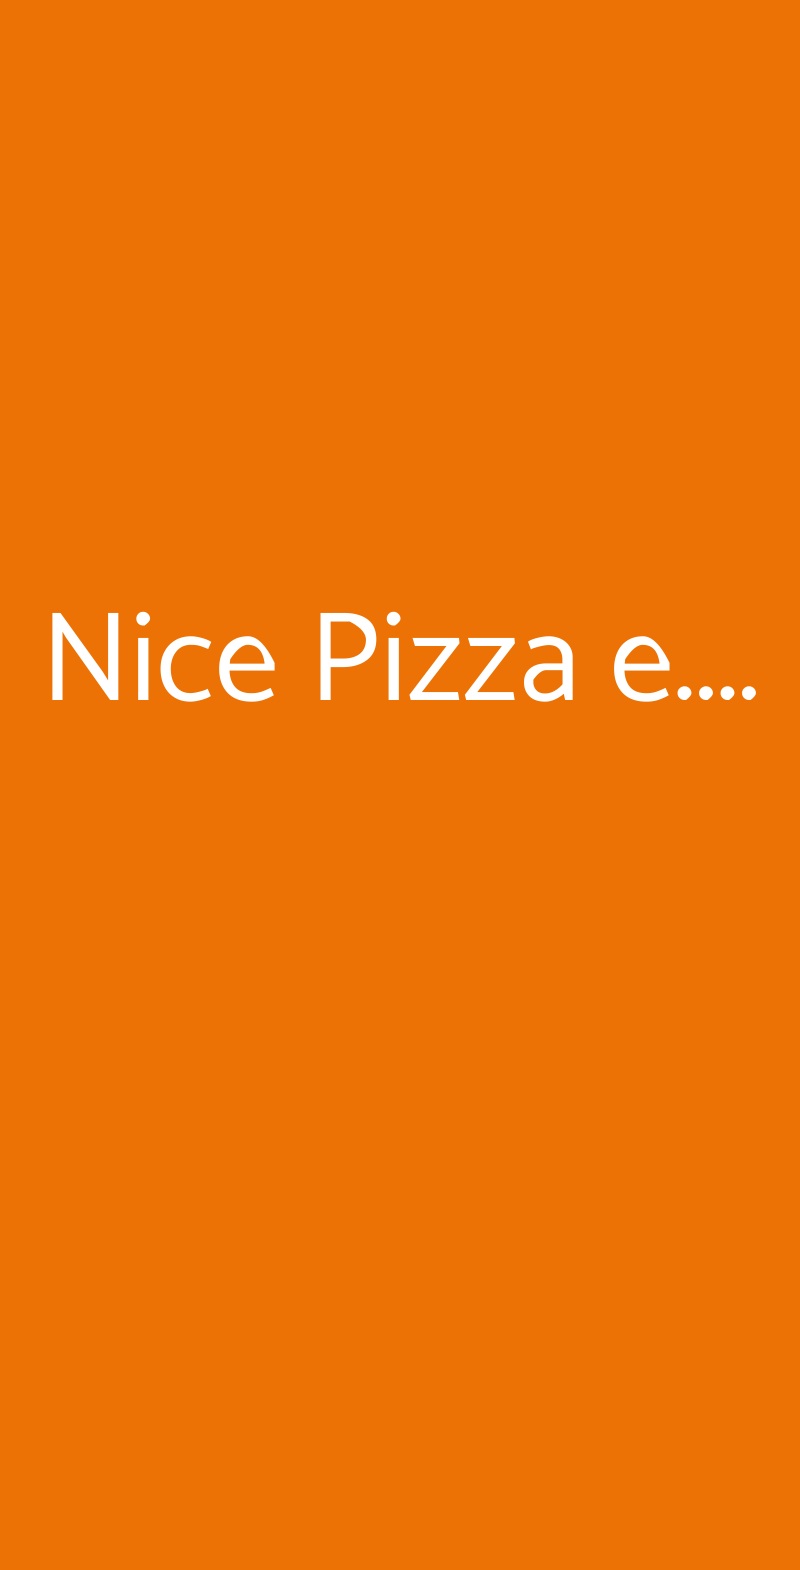 Nice Pizza e... - Pizzeria Roma Roma menù 1 pagina